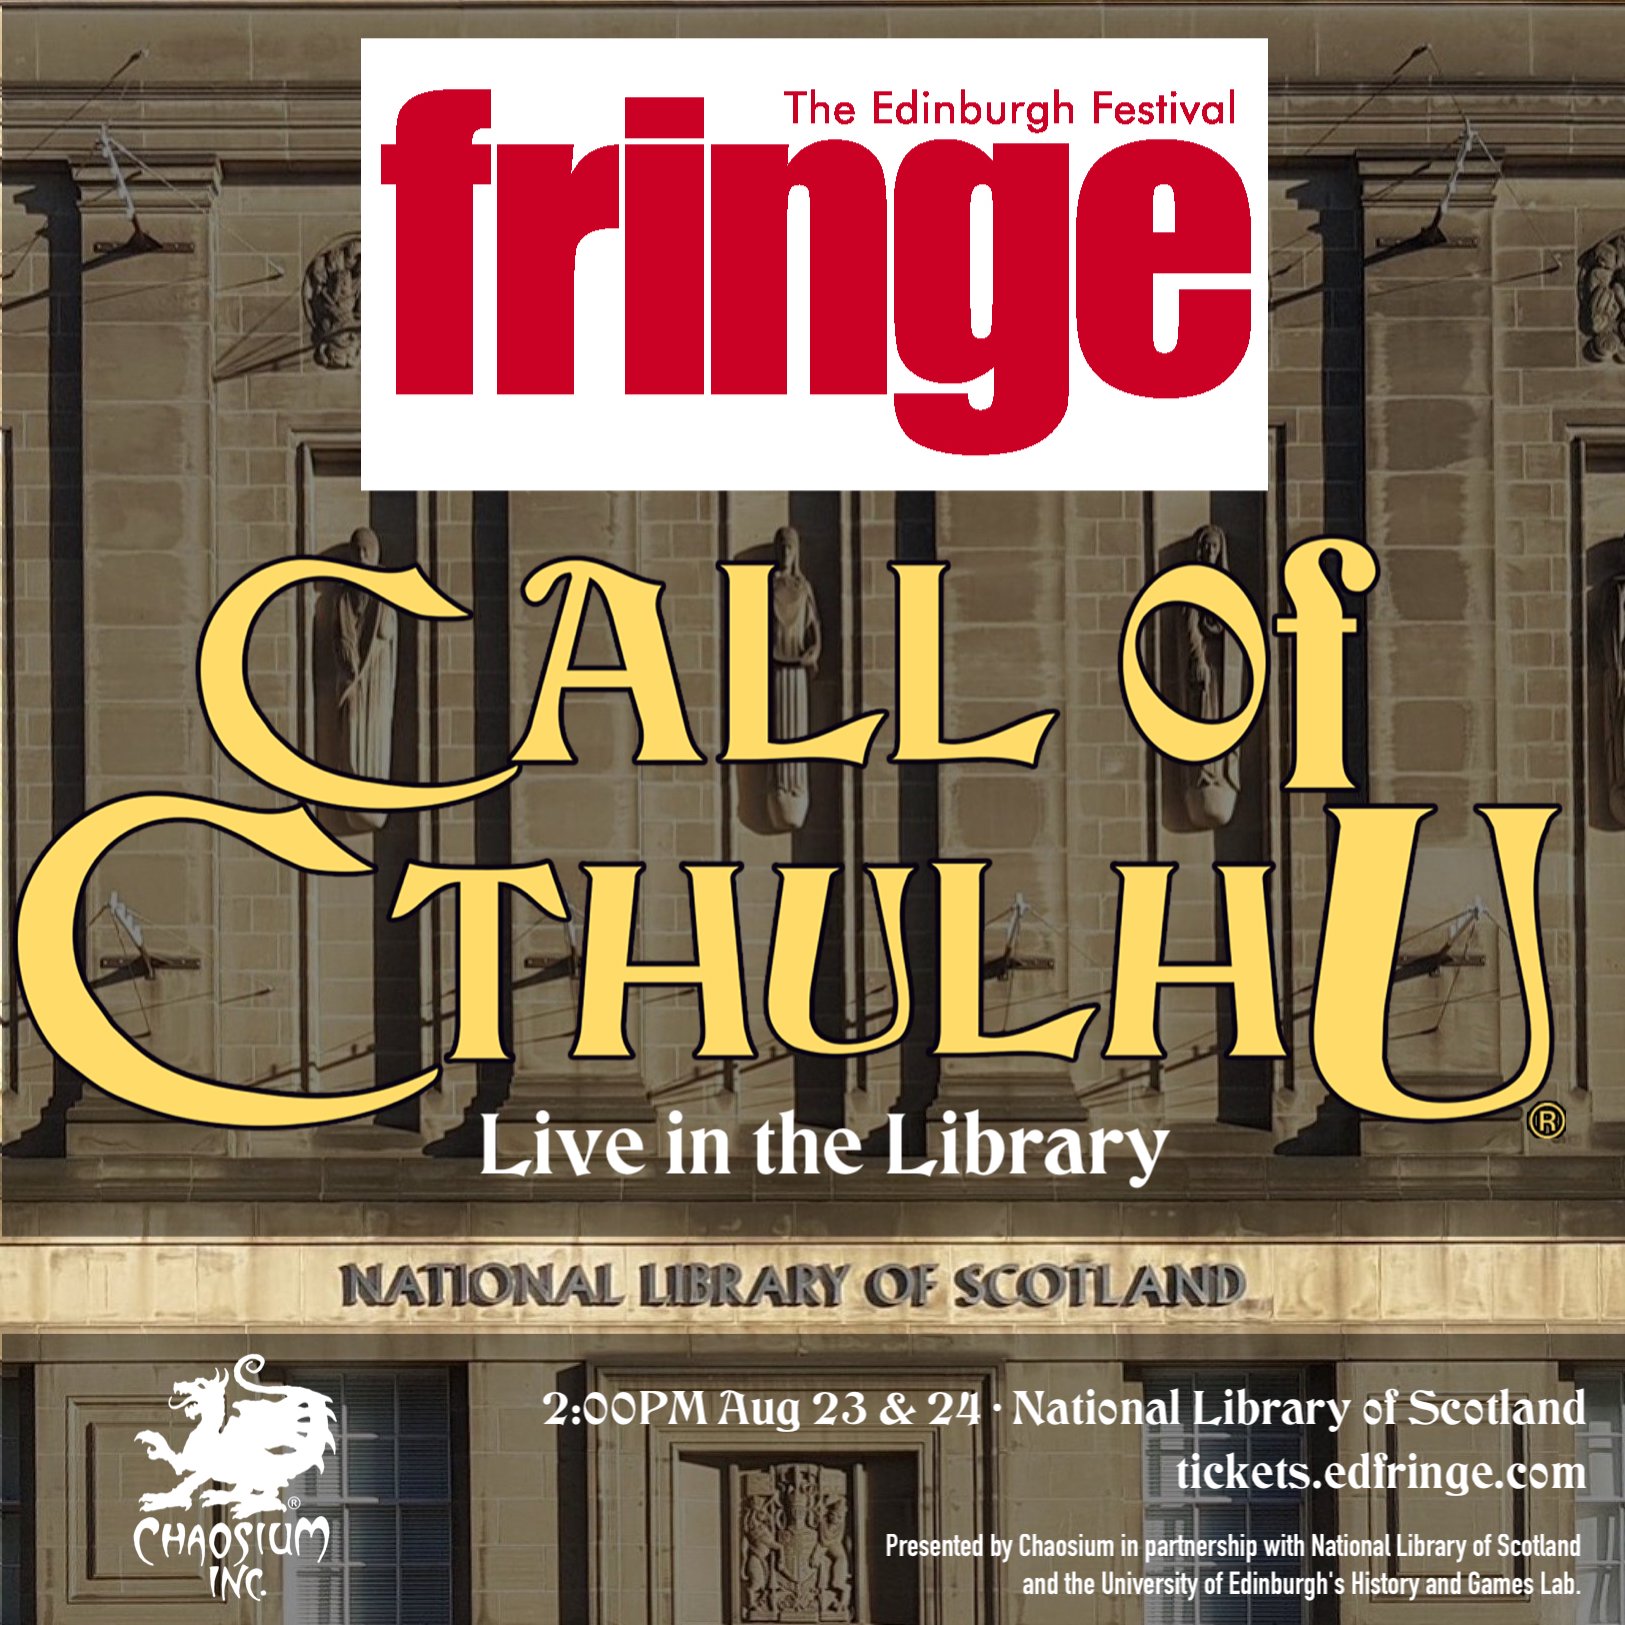 [Chaosium] Call of Cthulhu comes to the Edinburgh Fringe Festival!